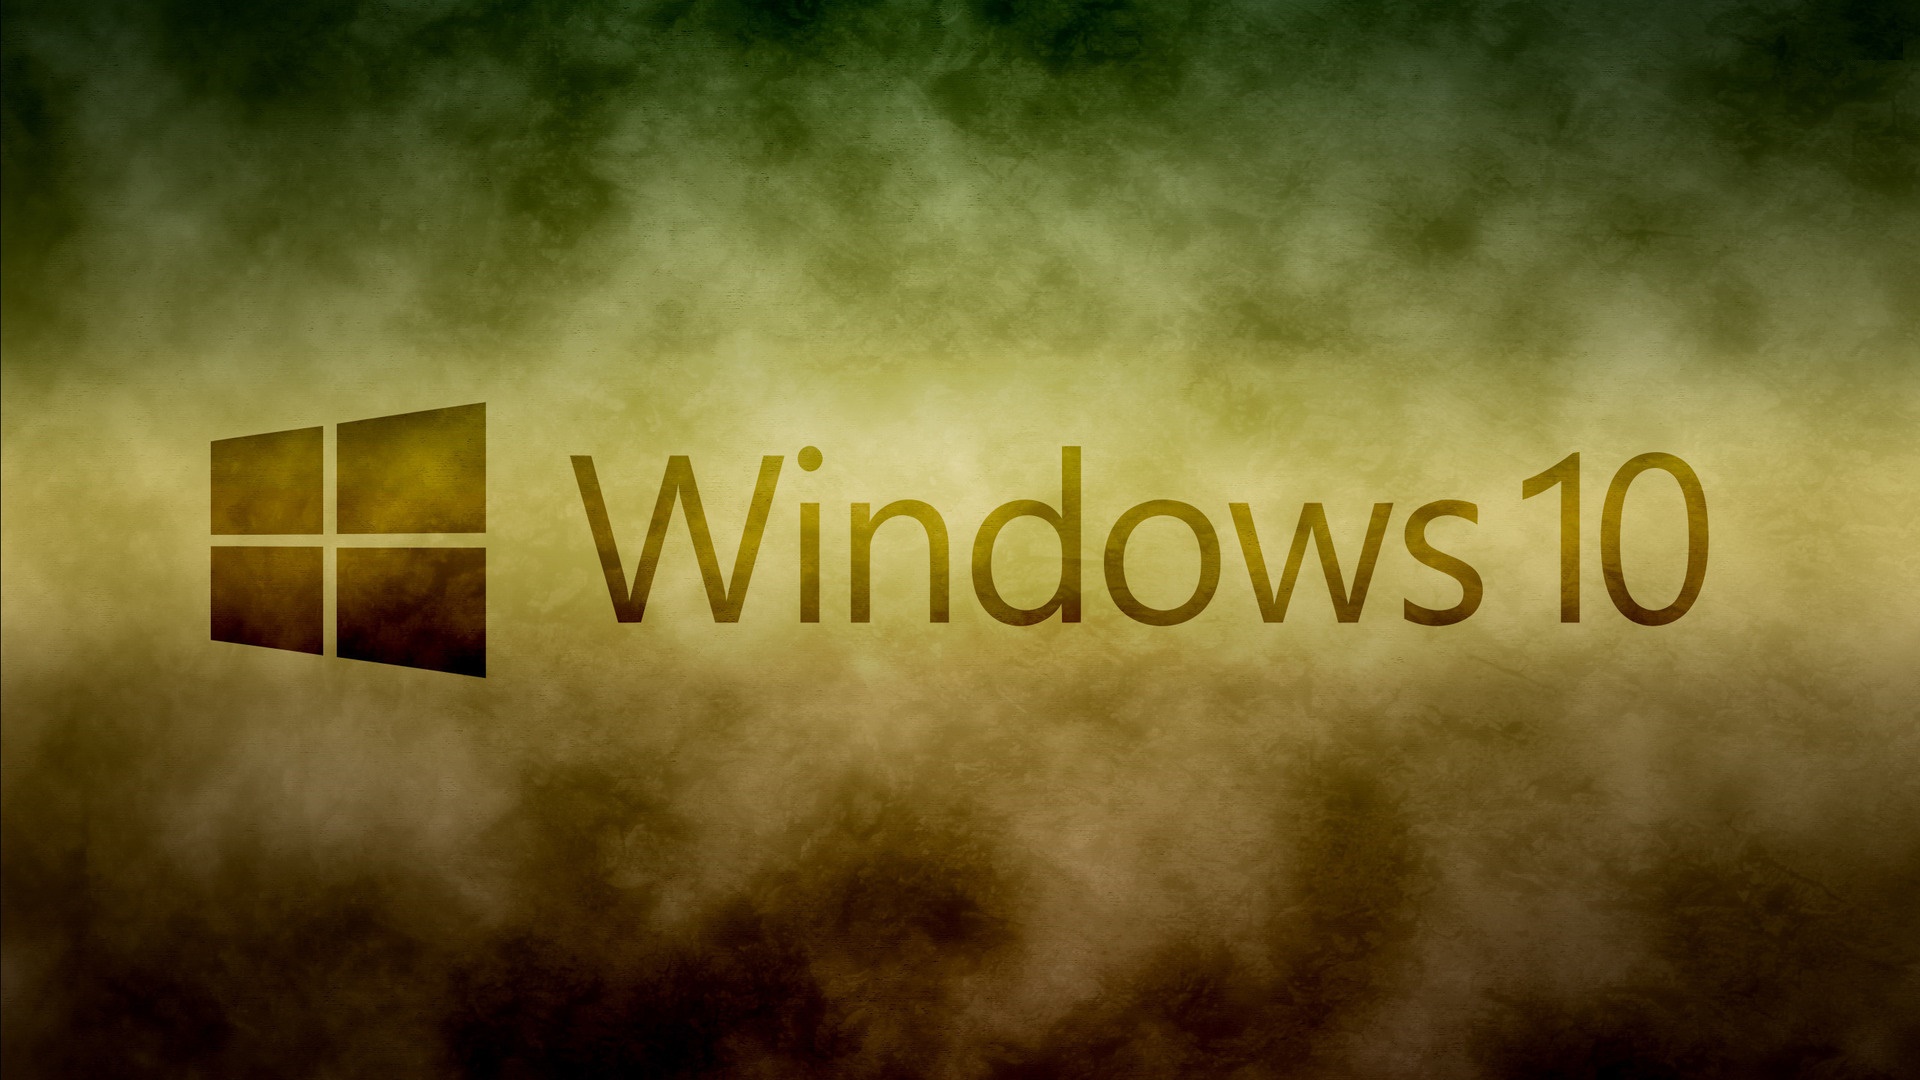 Free Download Hd Wallpaper For Laptop Windows 10 : Windows 10 ...